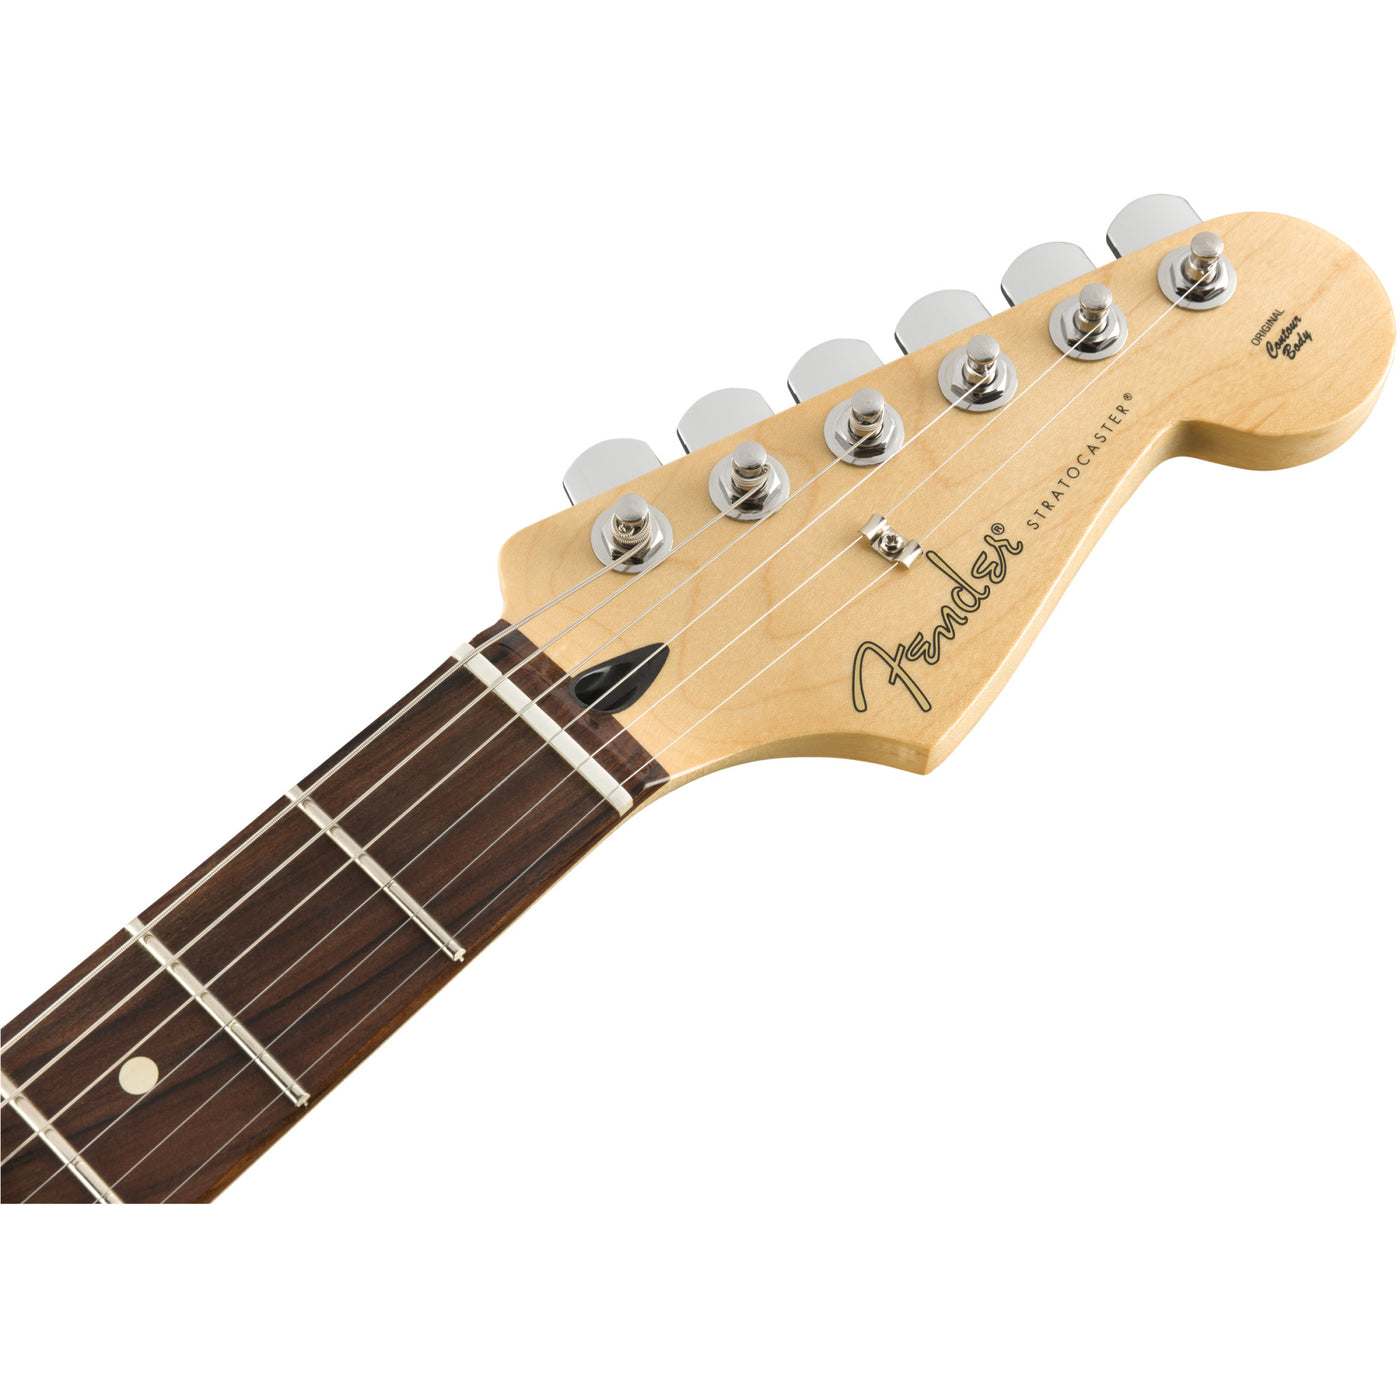 Fender Player Stratocaster Electric Guitar, Black (0144503506)